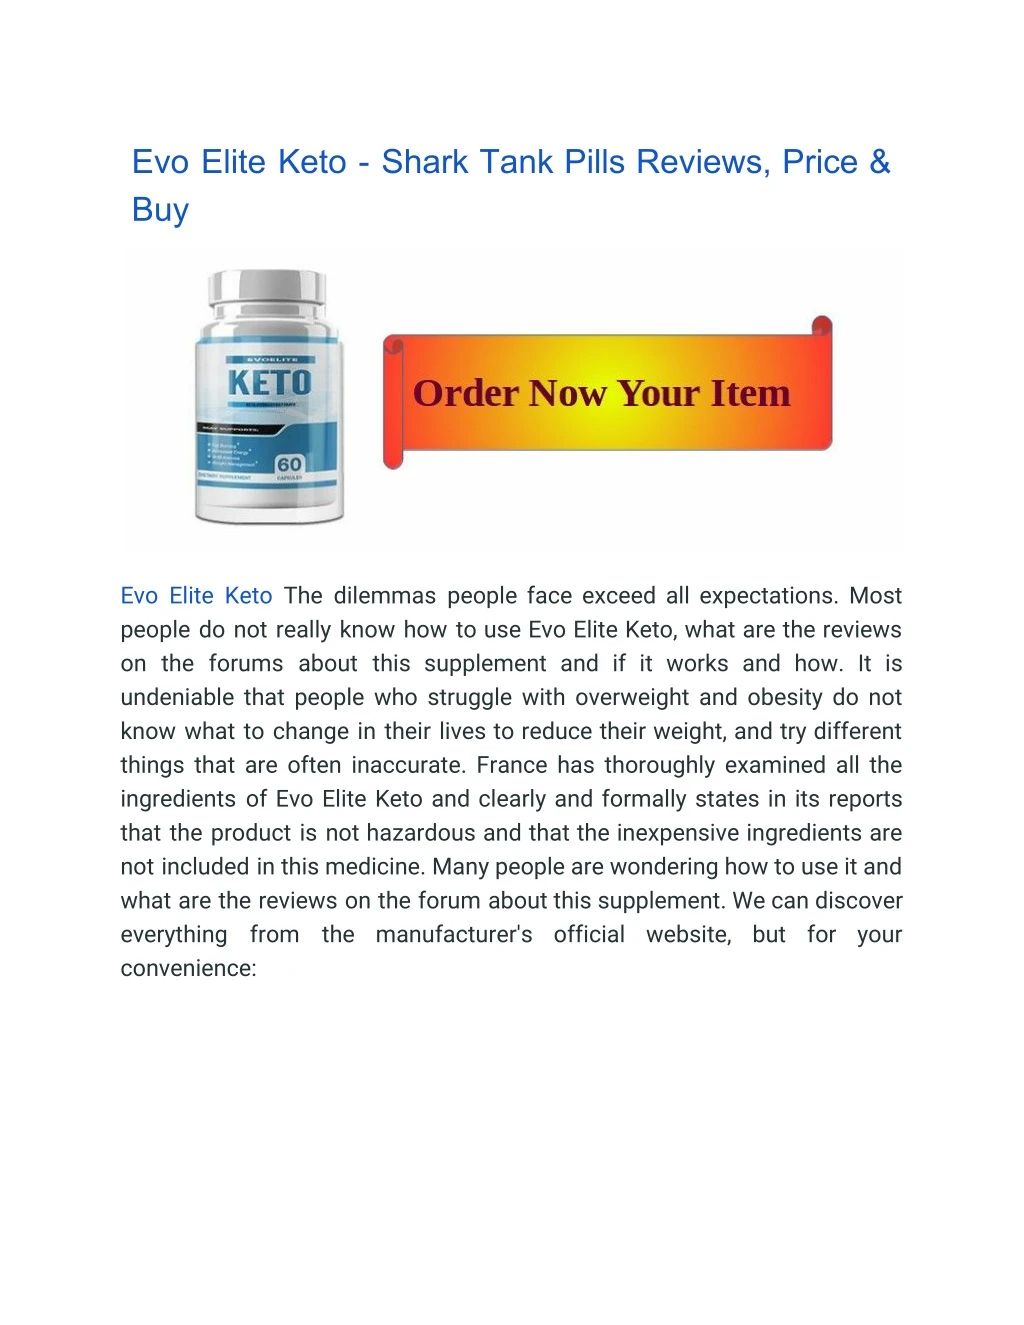 evo elite keto shark tank pills reviews price buy